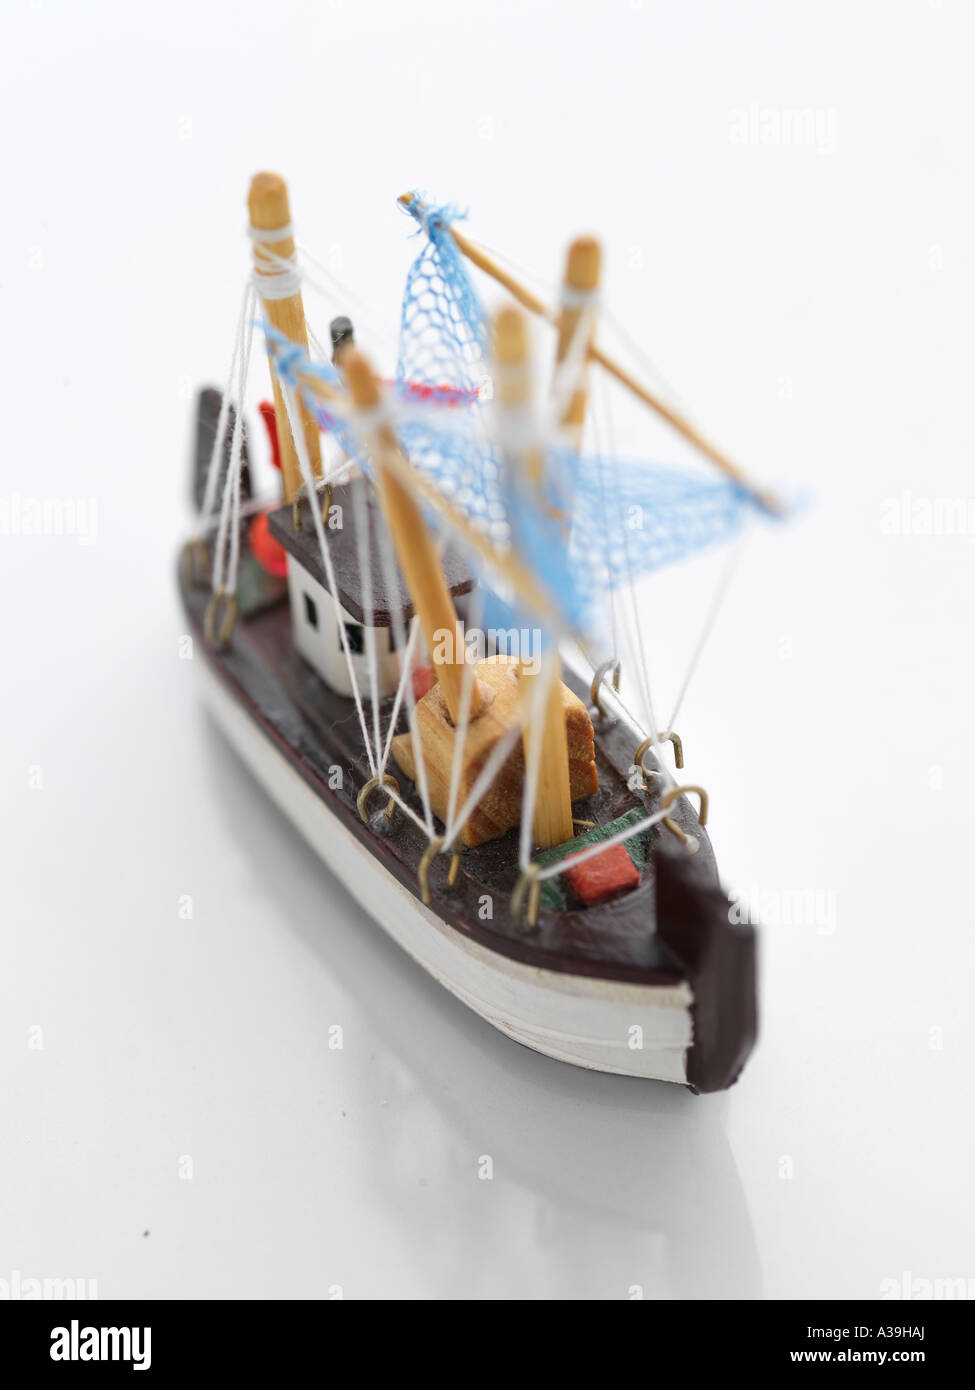 model, ship, ornament, wood, handicraft, souvenir, small, toy